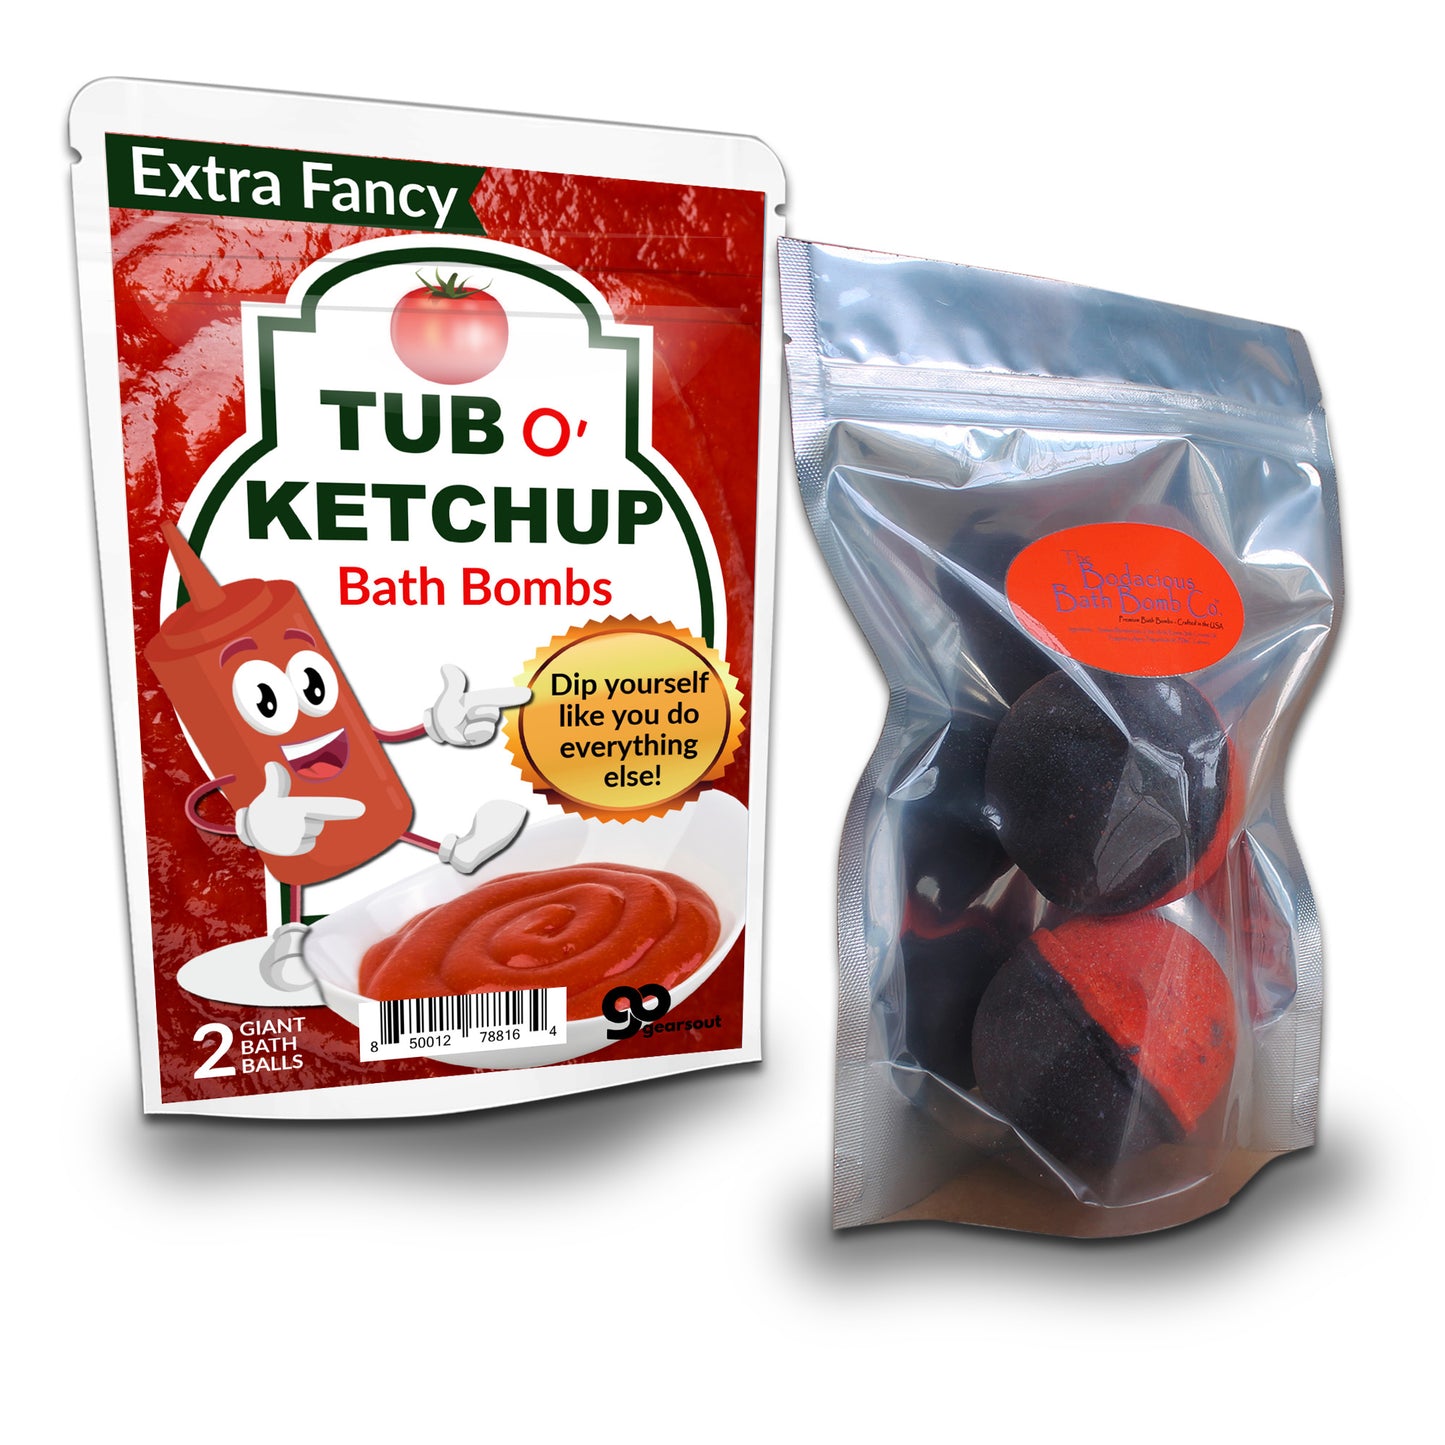 Tub O' Ketchup Bath Bombs